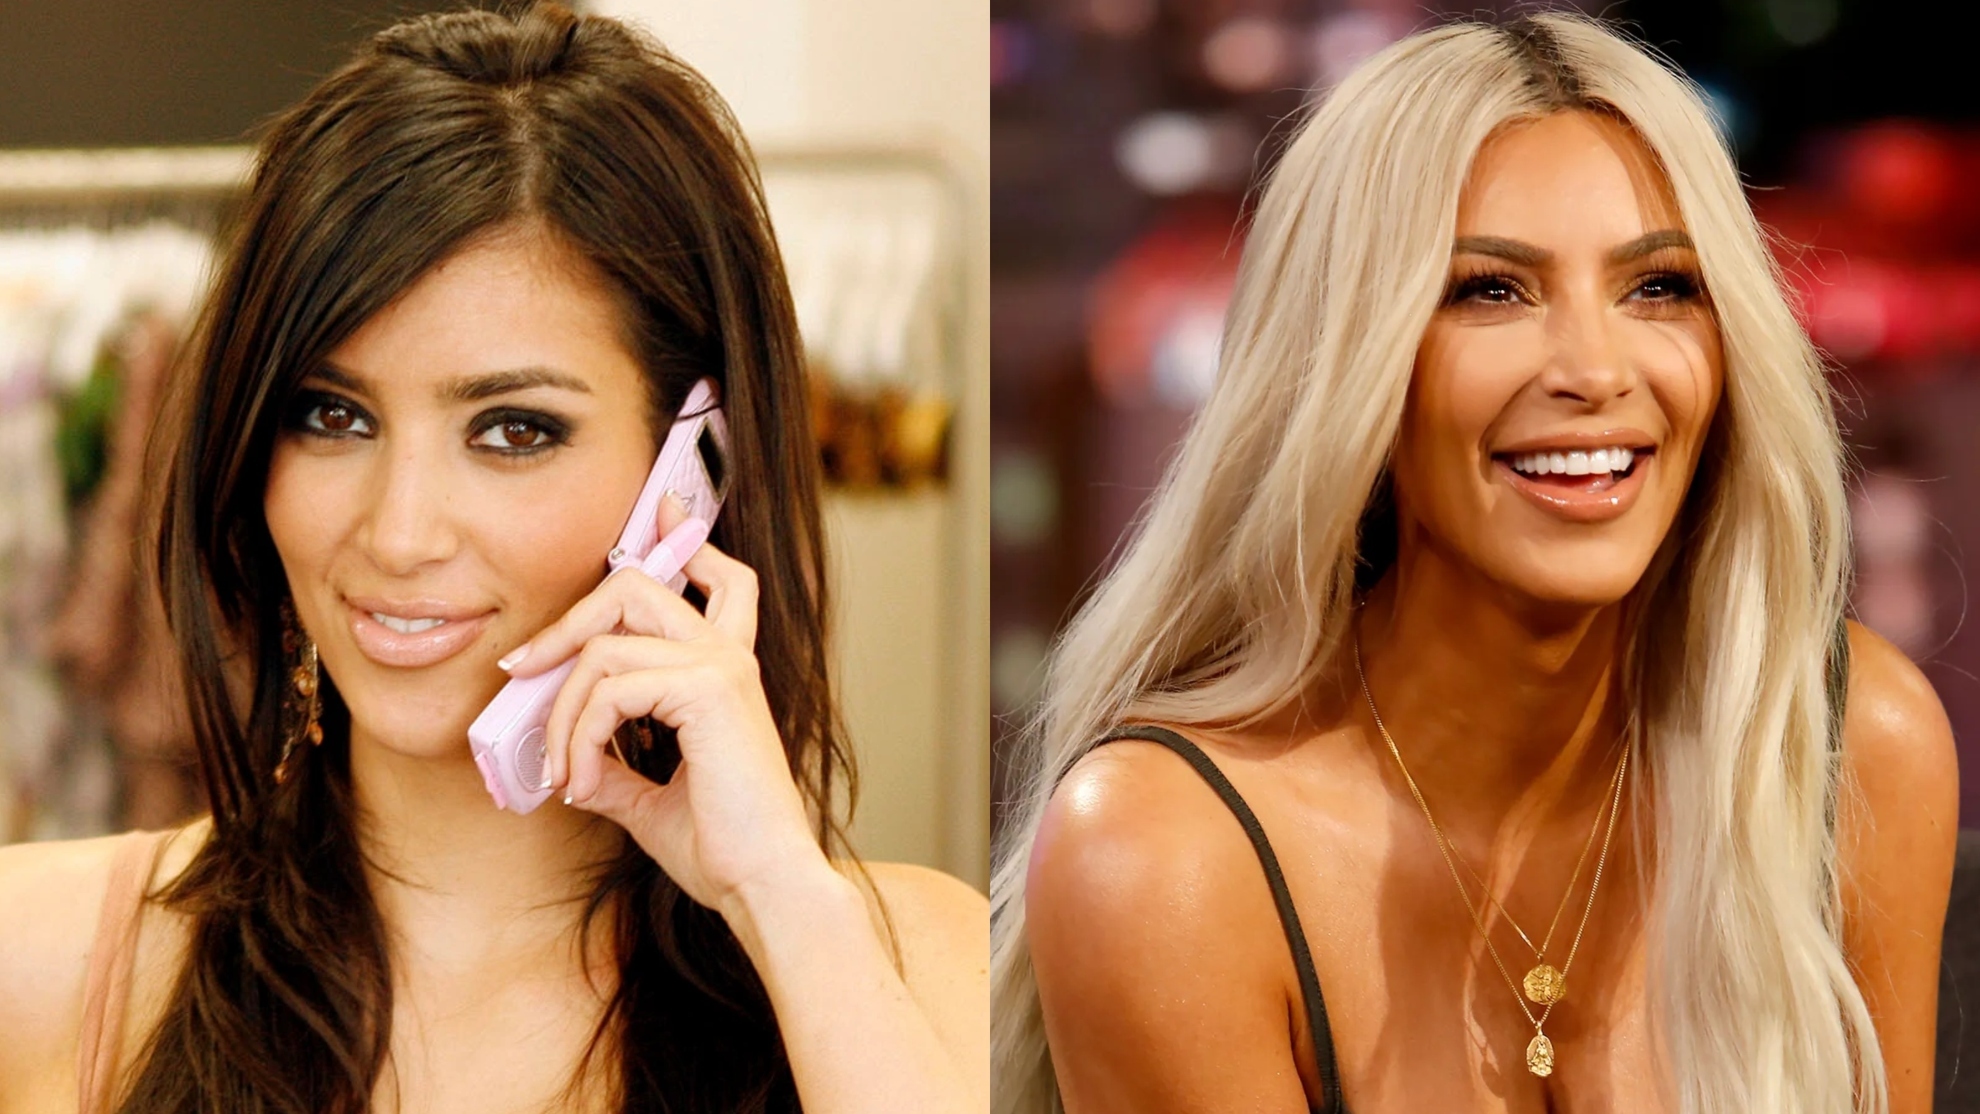 kim kardashian before and after hair